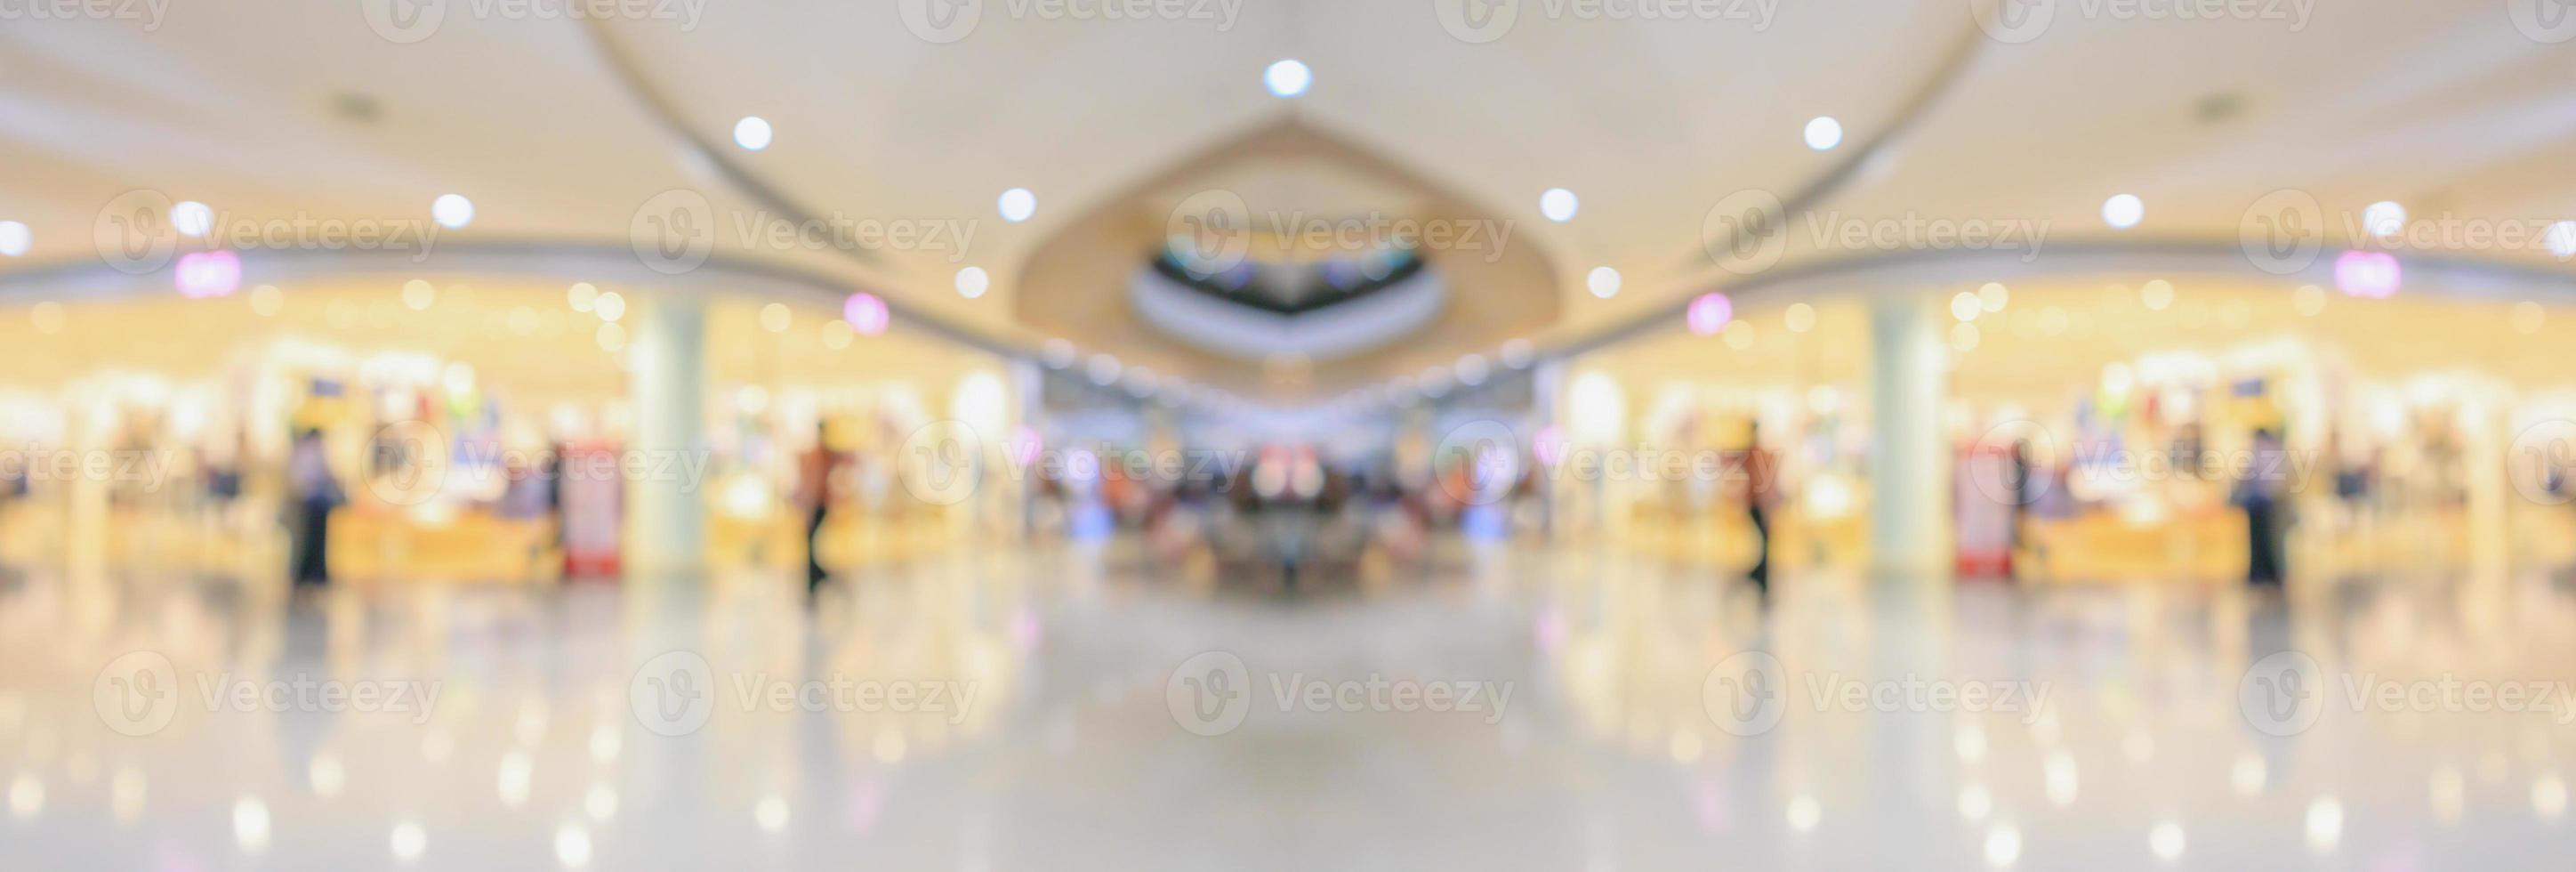 resumen desenfoque moderno centro comercial interior fondo foto